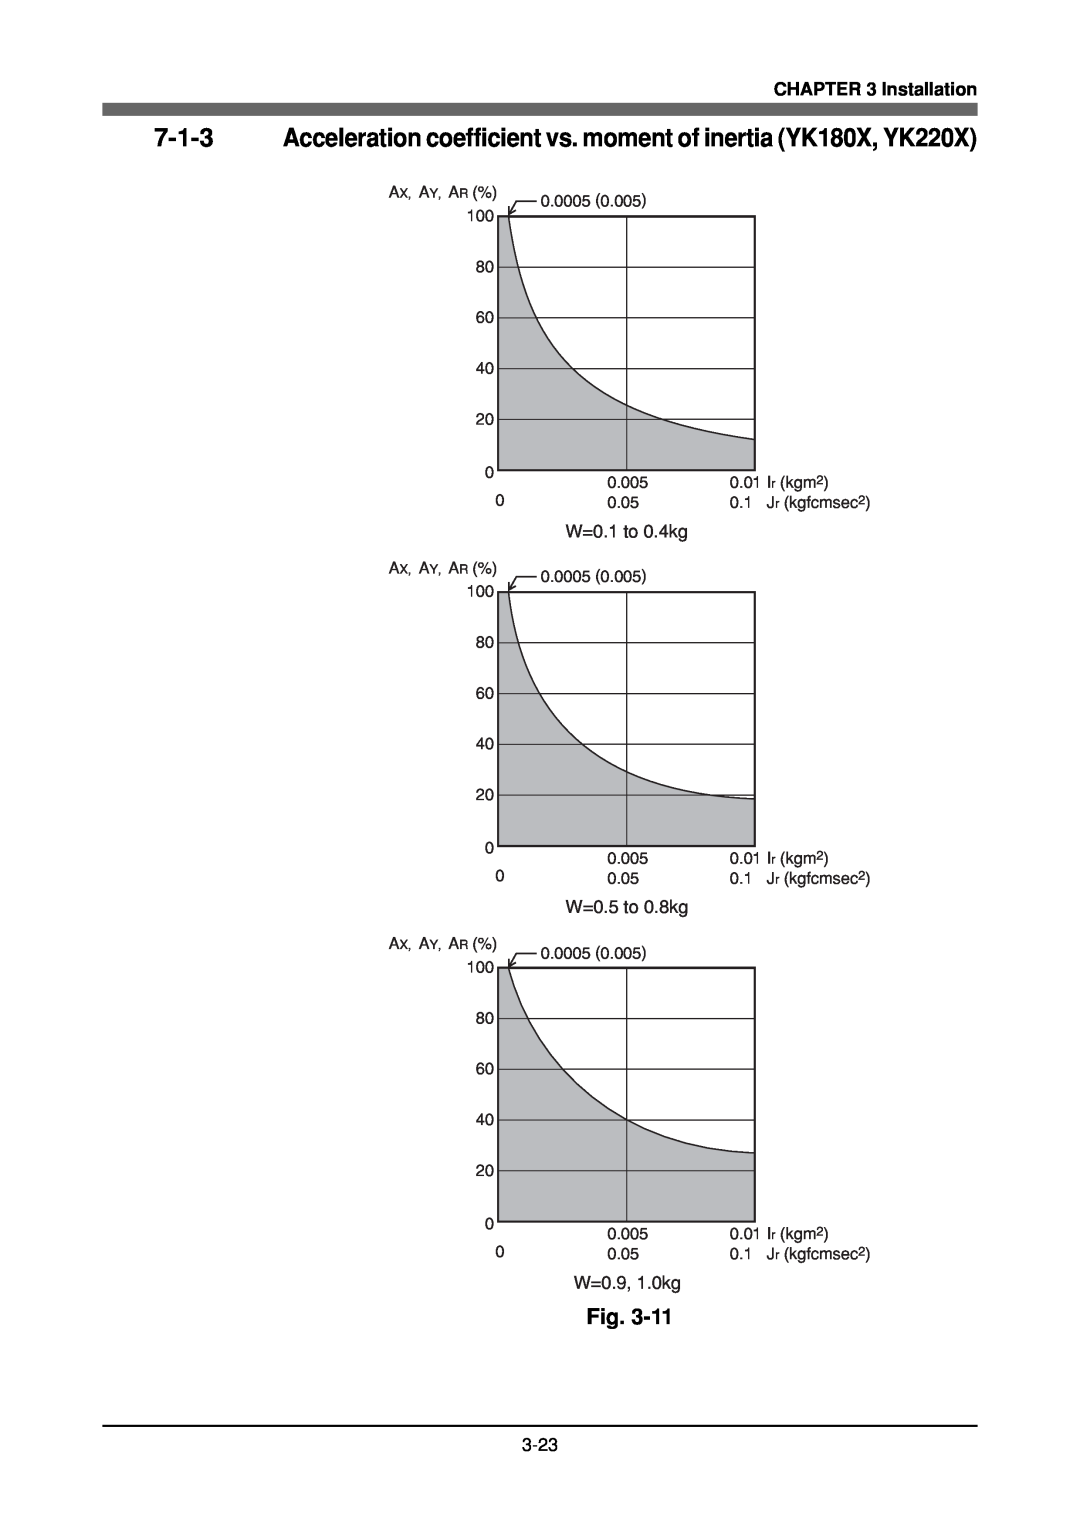 Yamaha YK120X 7-1-3, Acceleration coefficient vs. moment of inertia YK180X, YK220X, Installation, W=0.1 to 0.4kg 